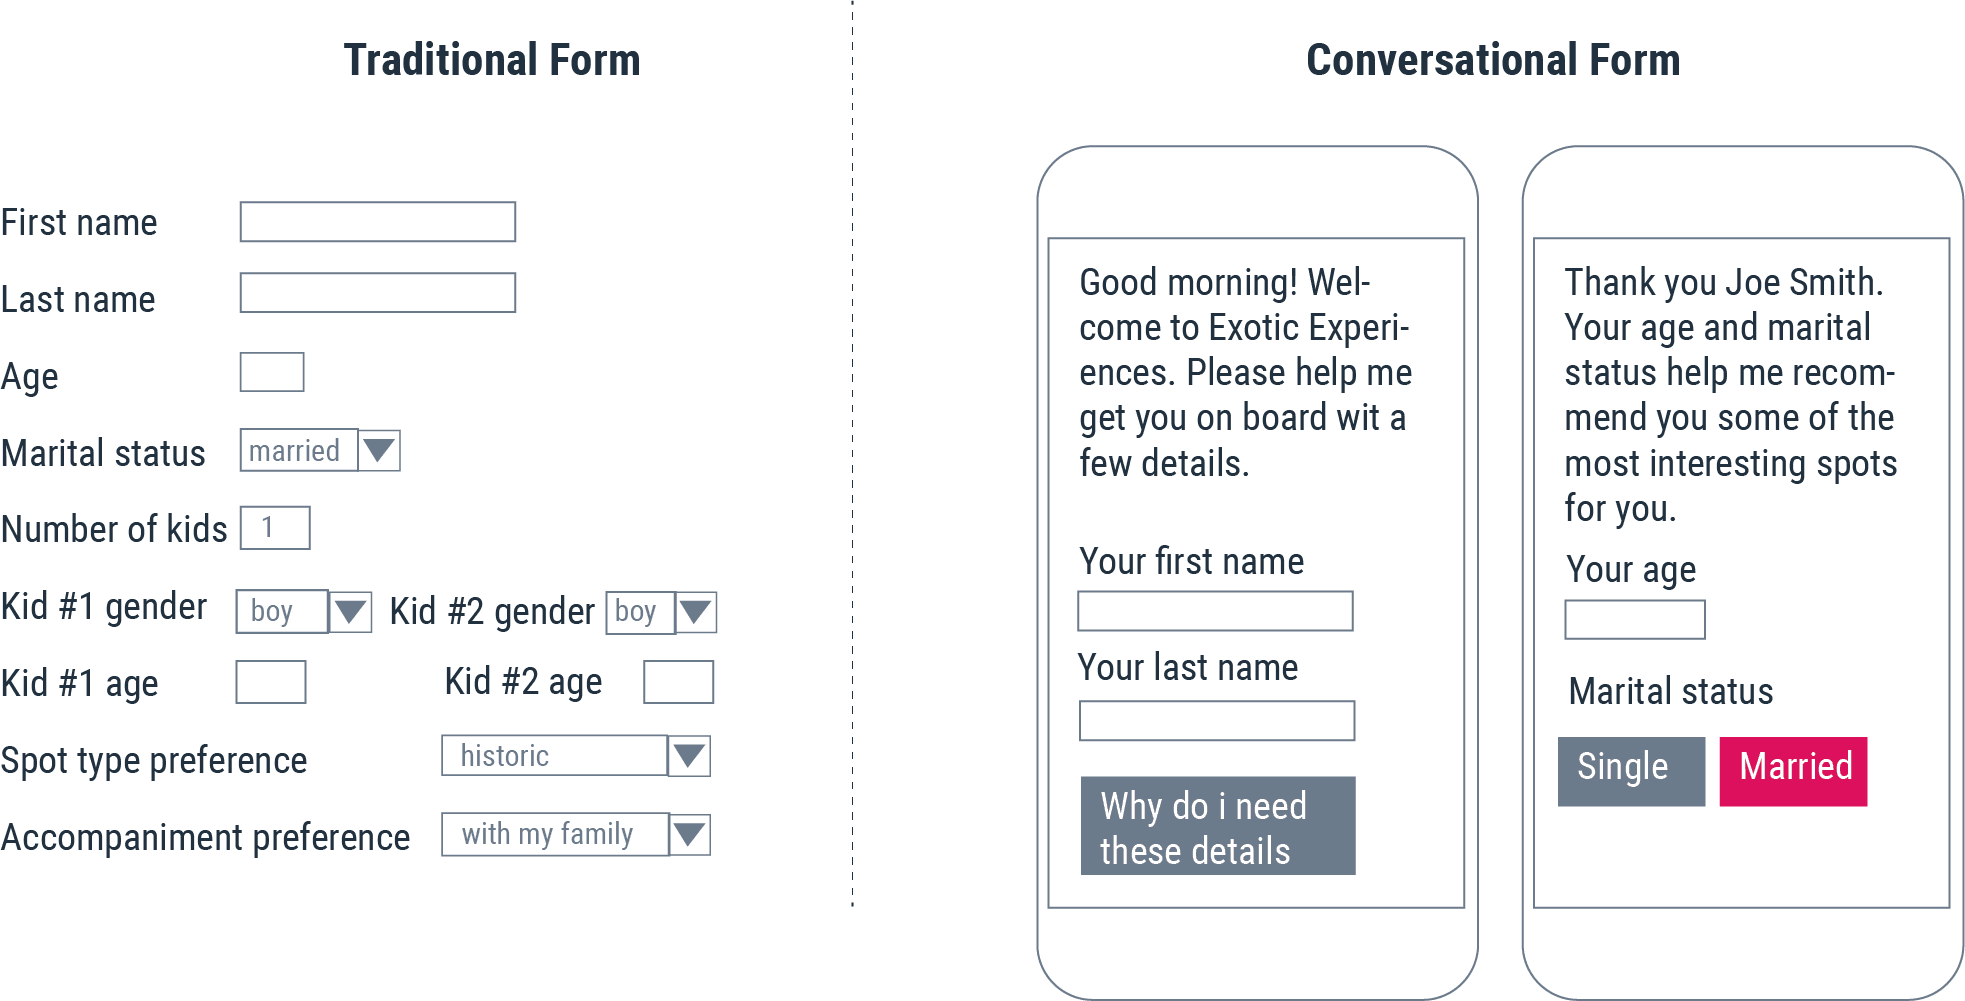 Conversational form